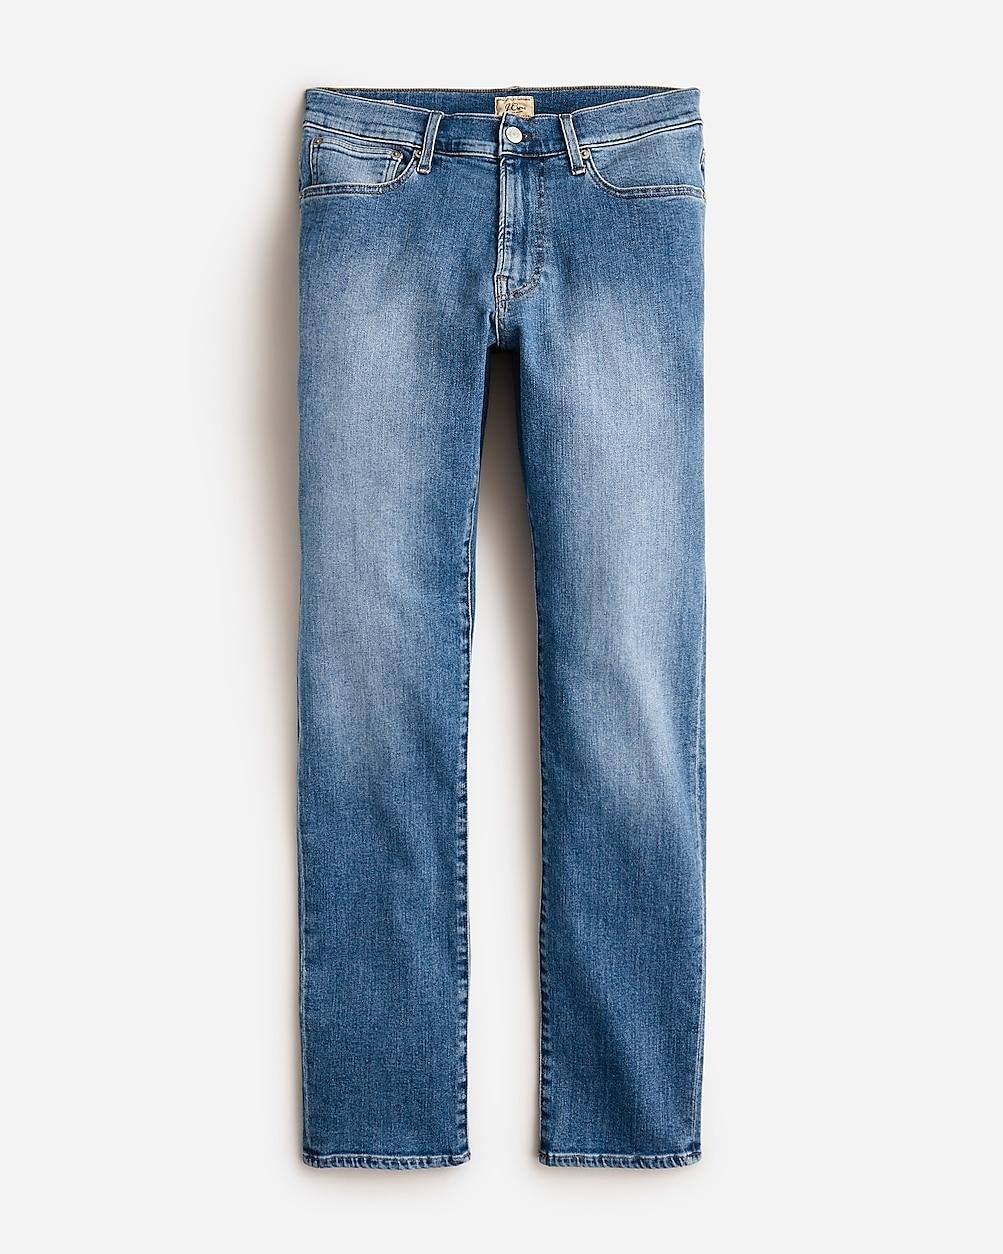 770™ Straight-fit stretch jean in medium wash by J.CREW